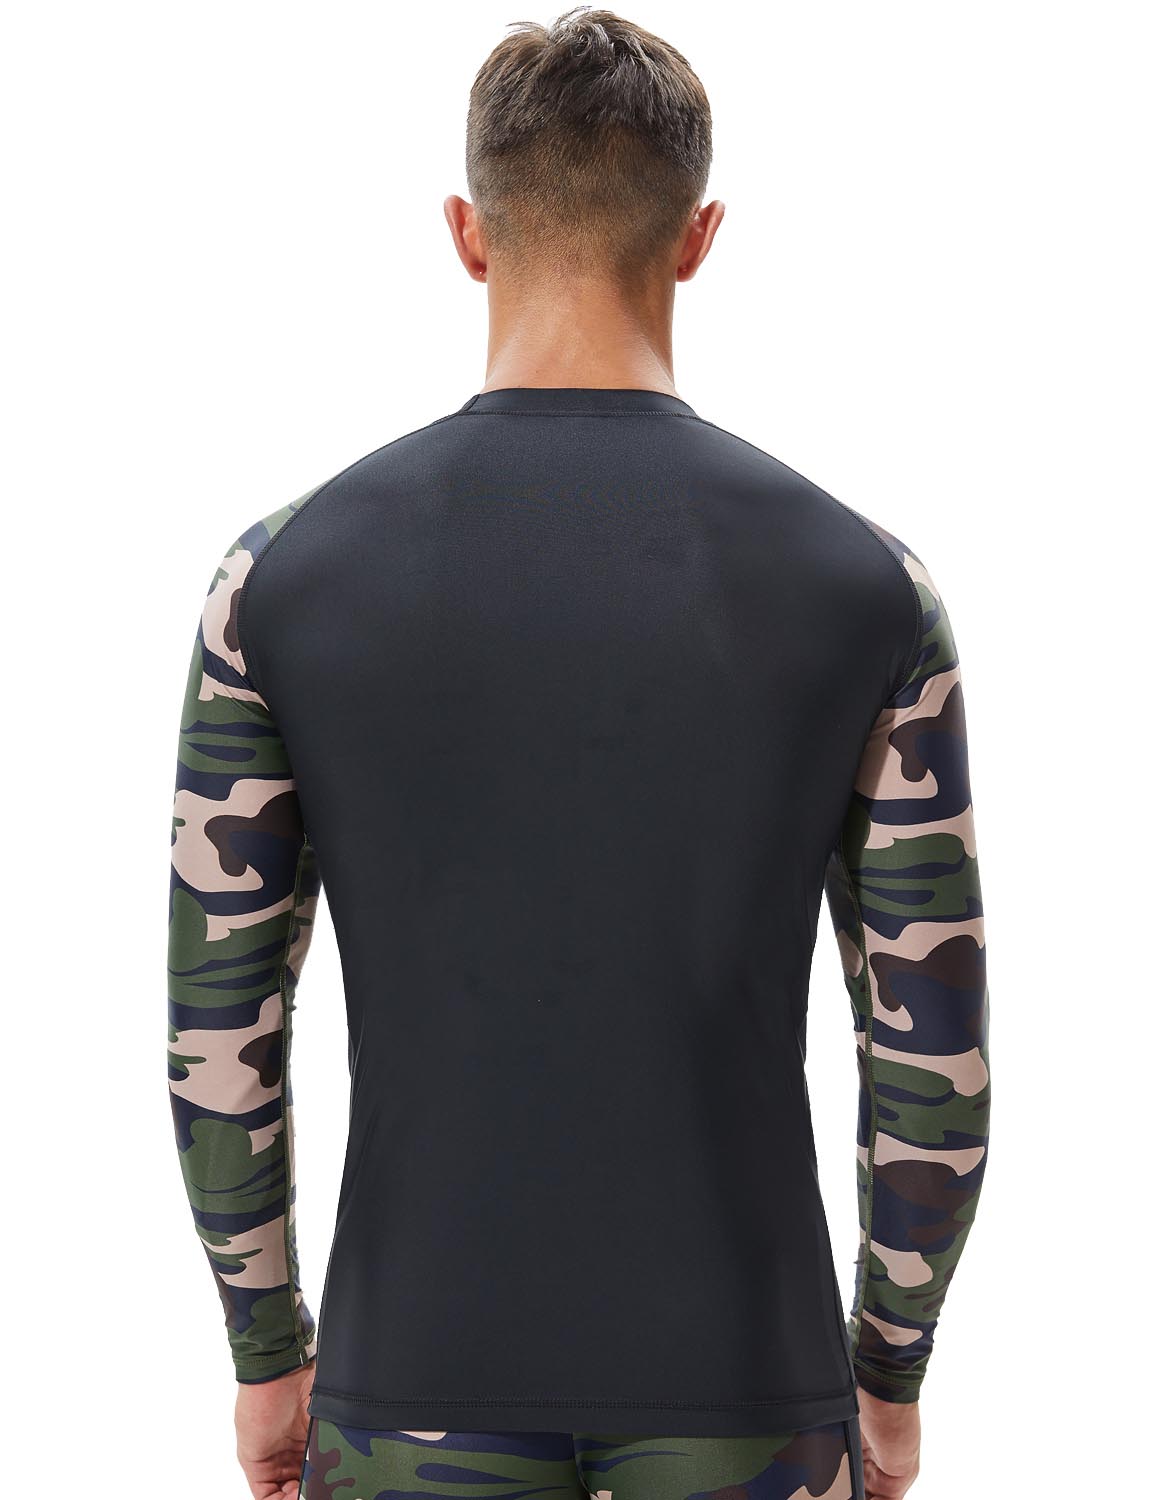 Camouflage Rash Guard Surfing Shirt 8802